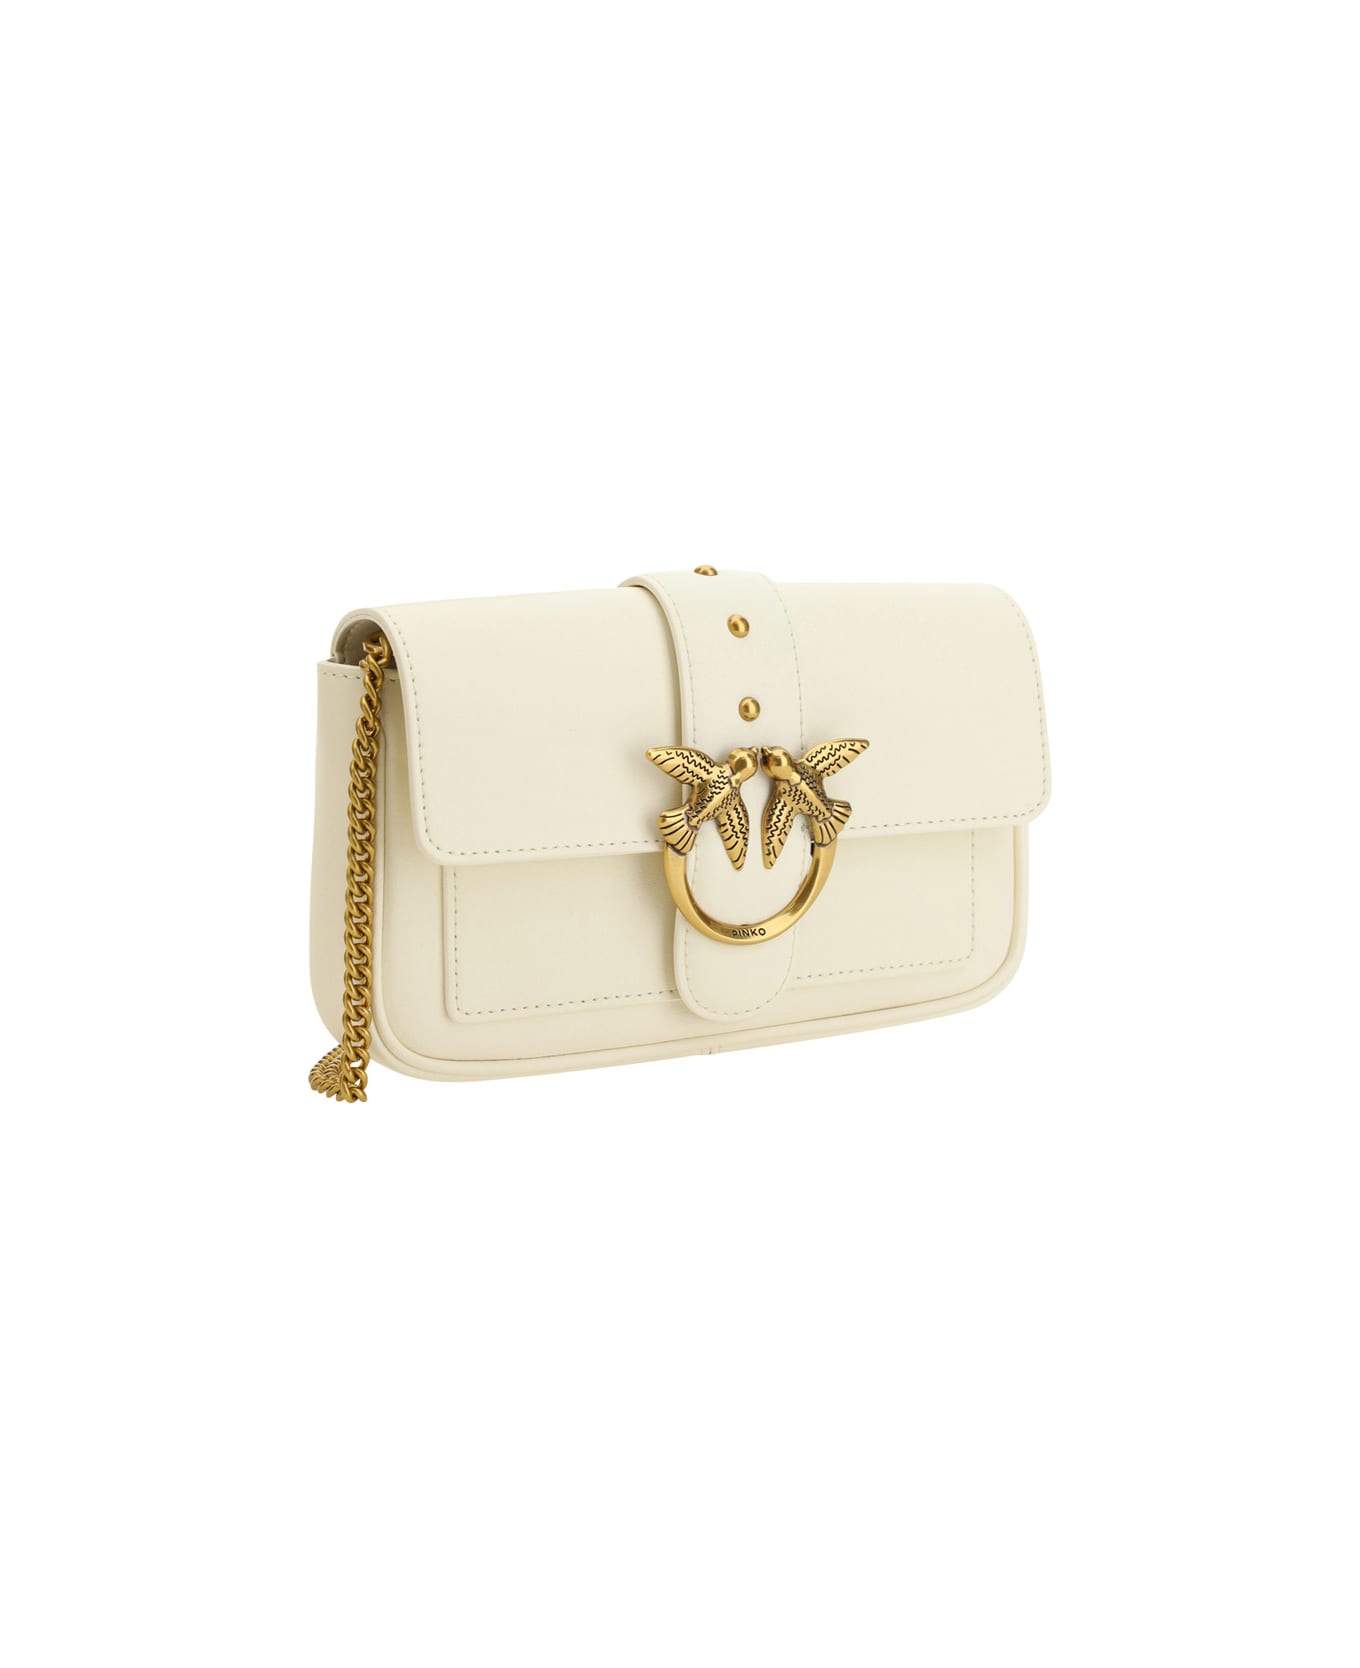 Pinko Love One Pocket Crossbody Bag - Q Bianco Seta Antique Gold